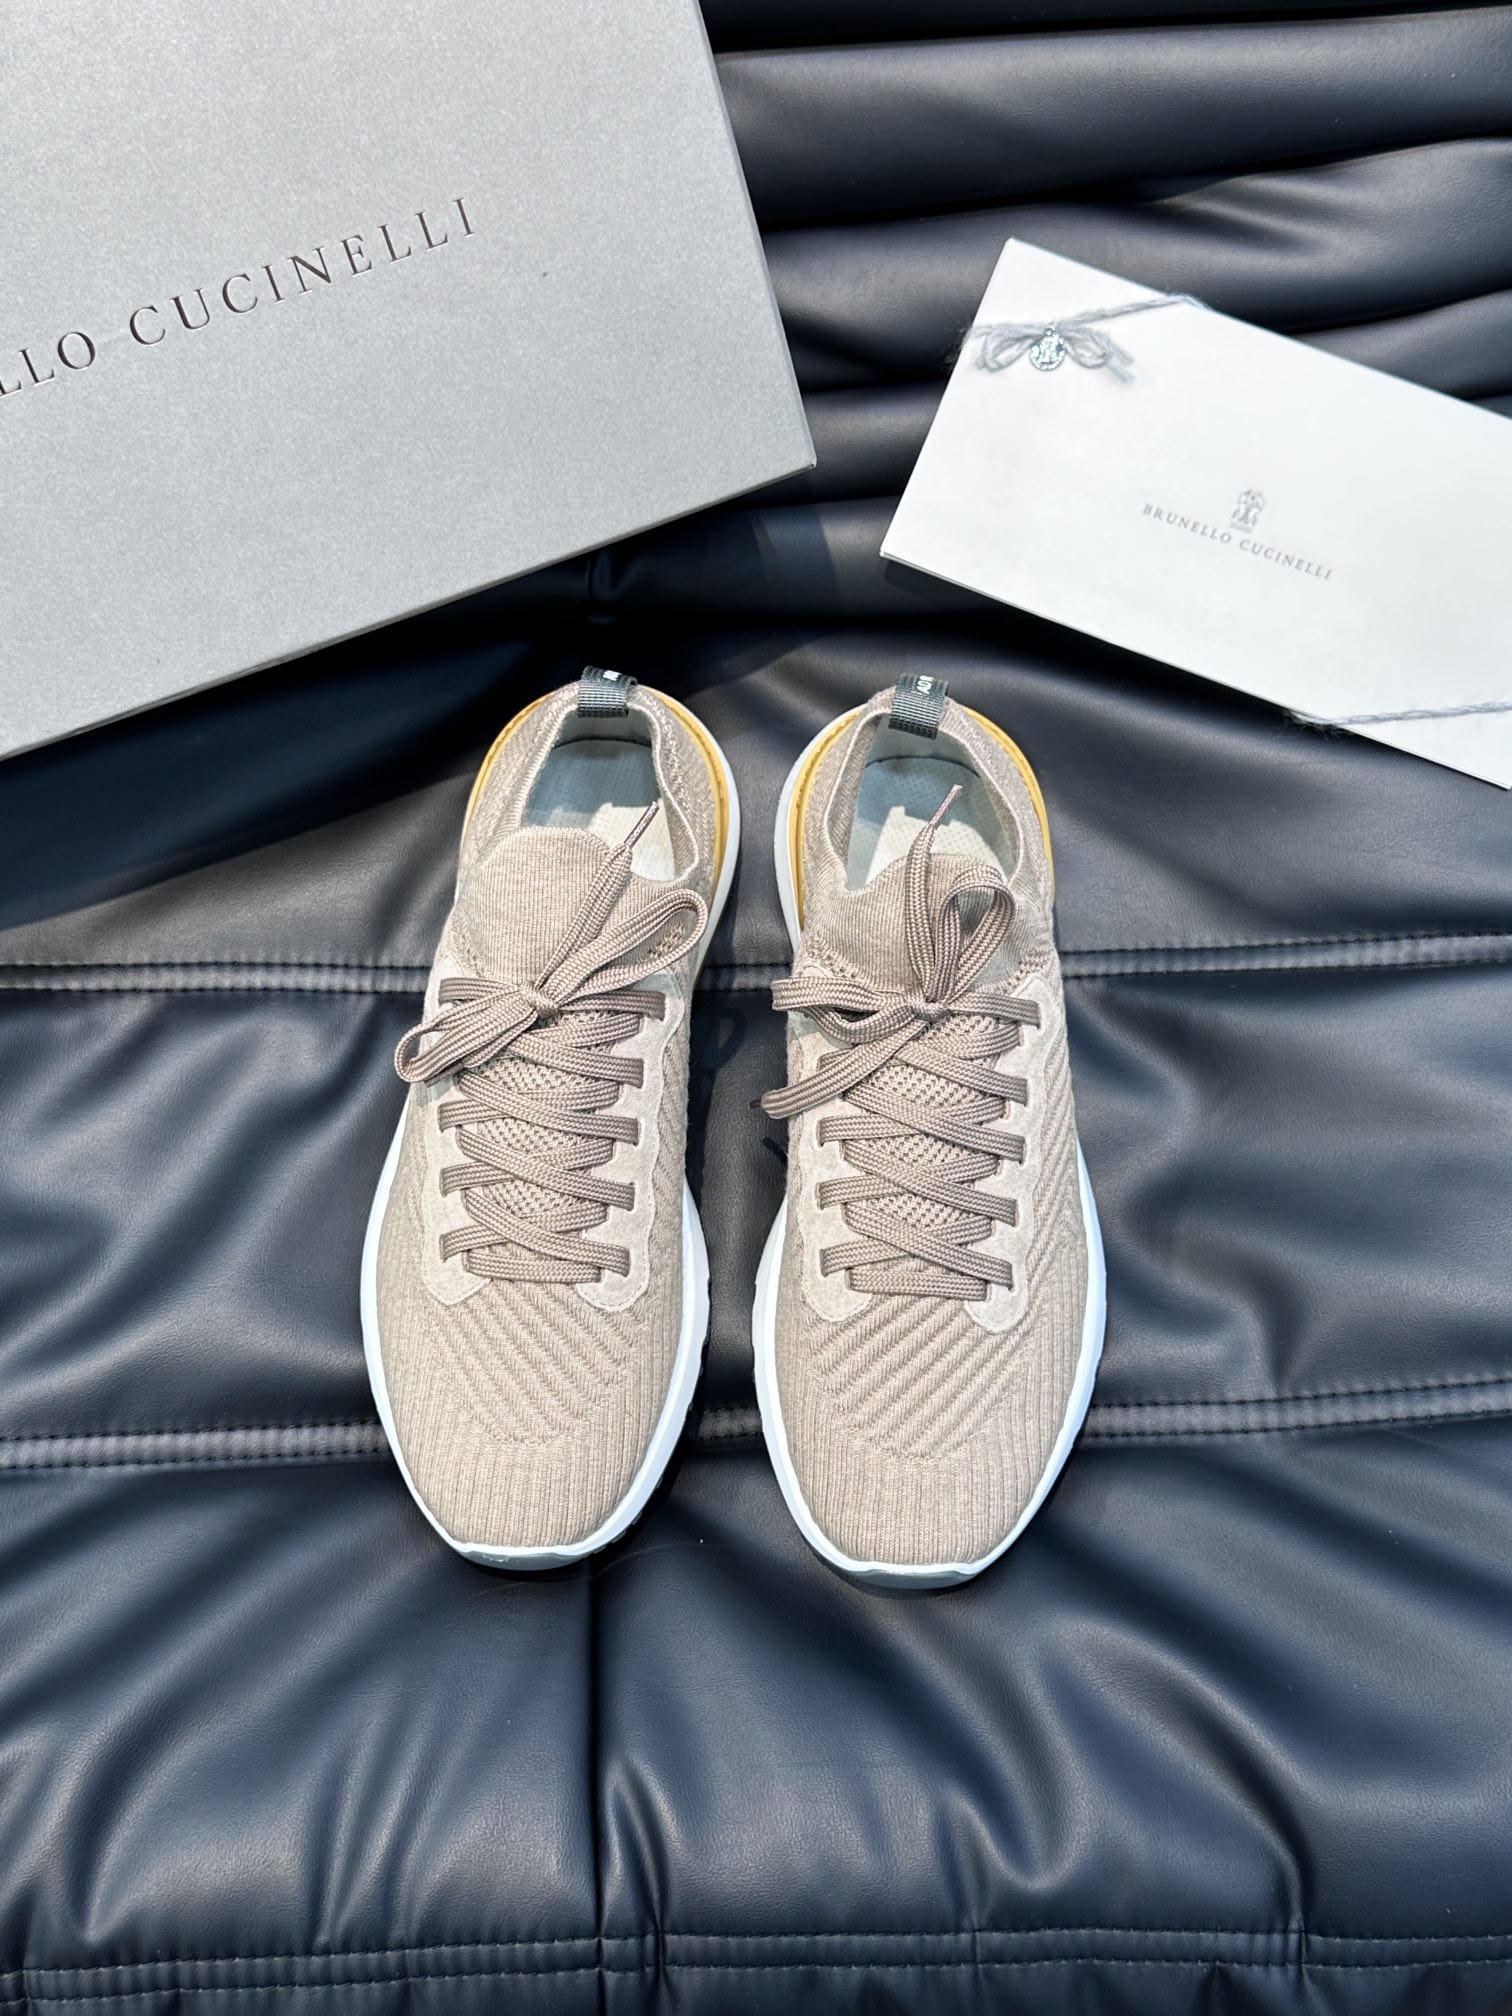 BrunelloCucinelli新款拼色运动板男鞋此款运动鞋面料采用进口飞织春夏穿着舒适透气这个夏天必